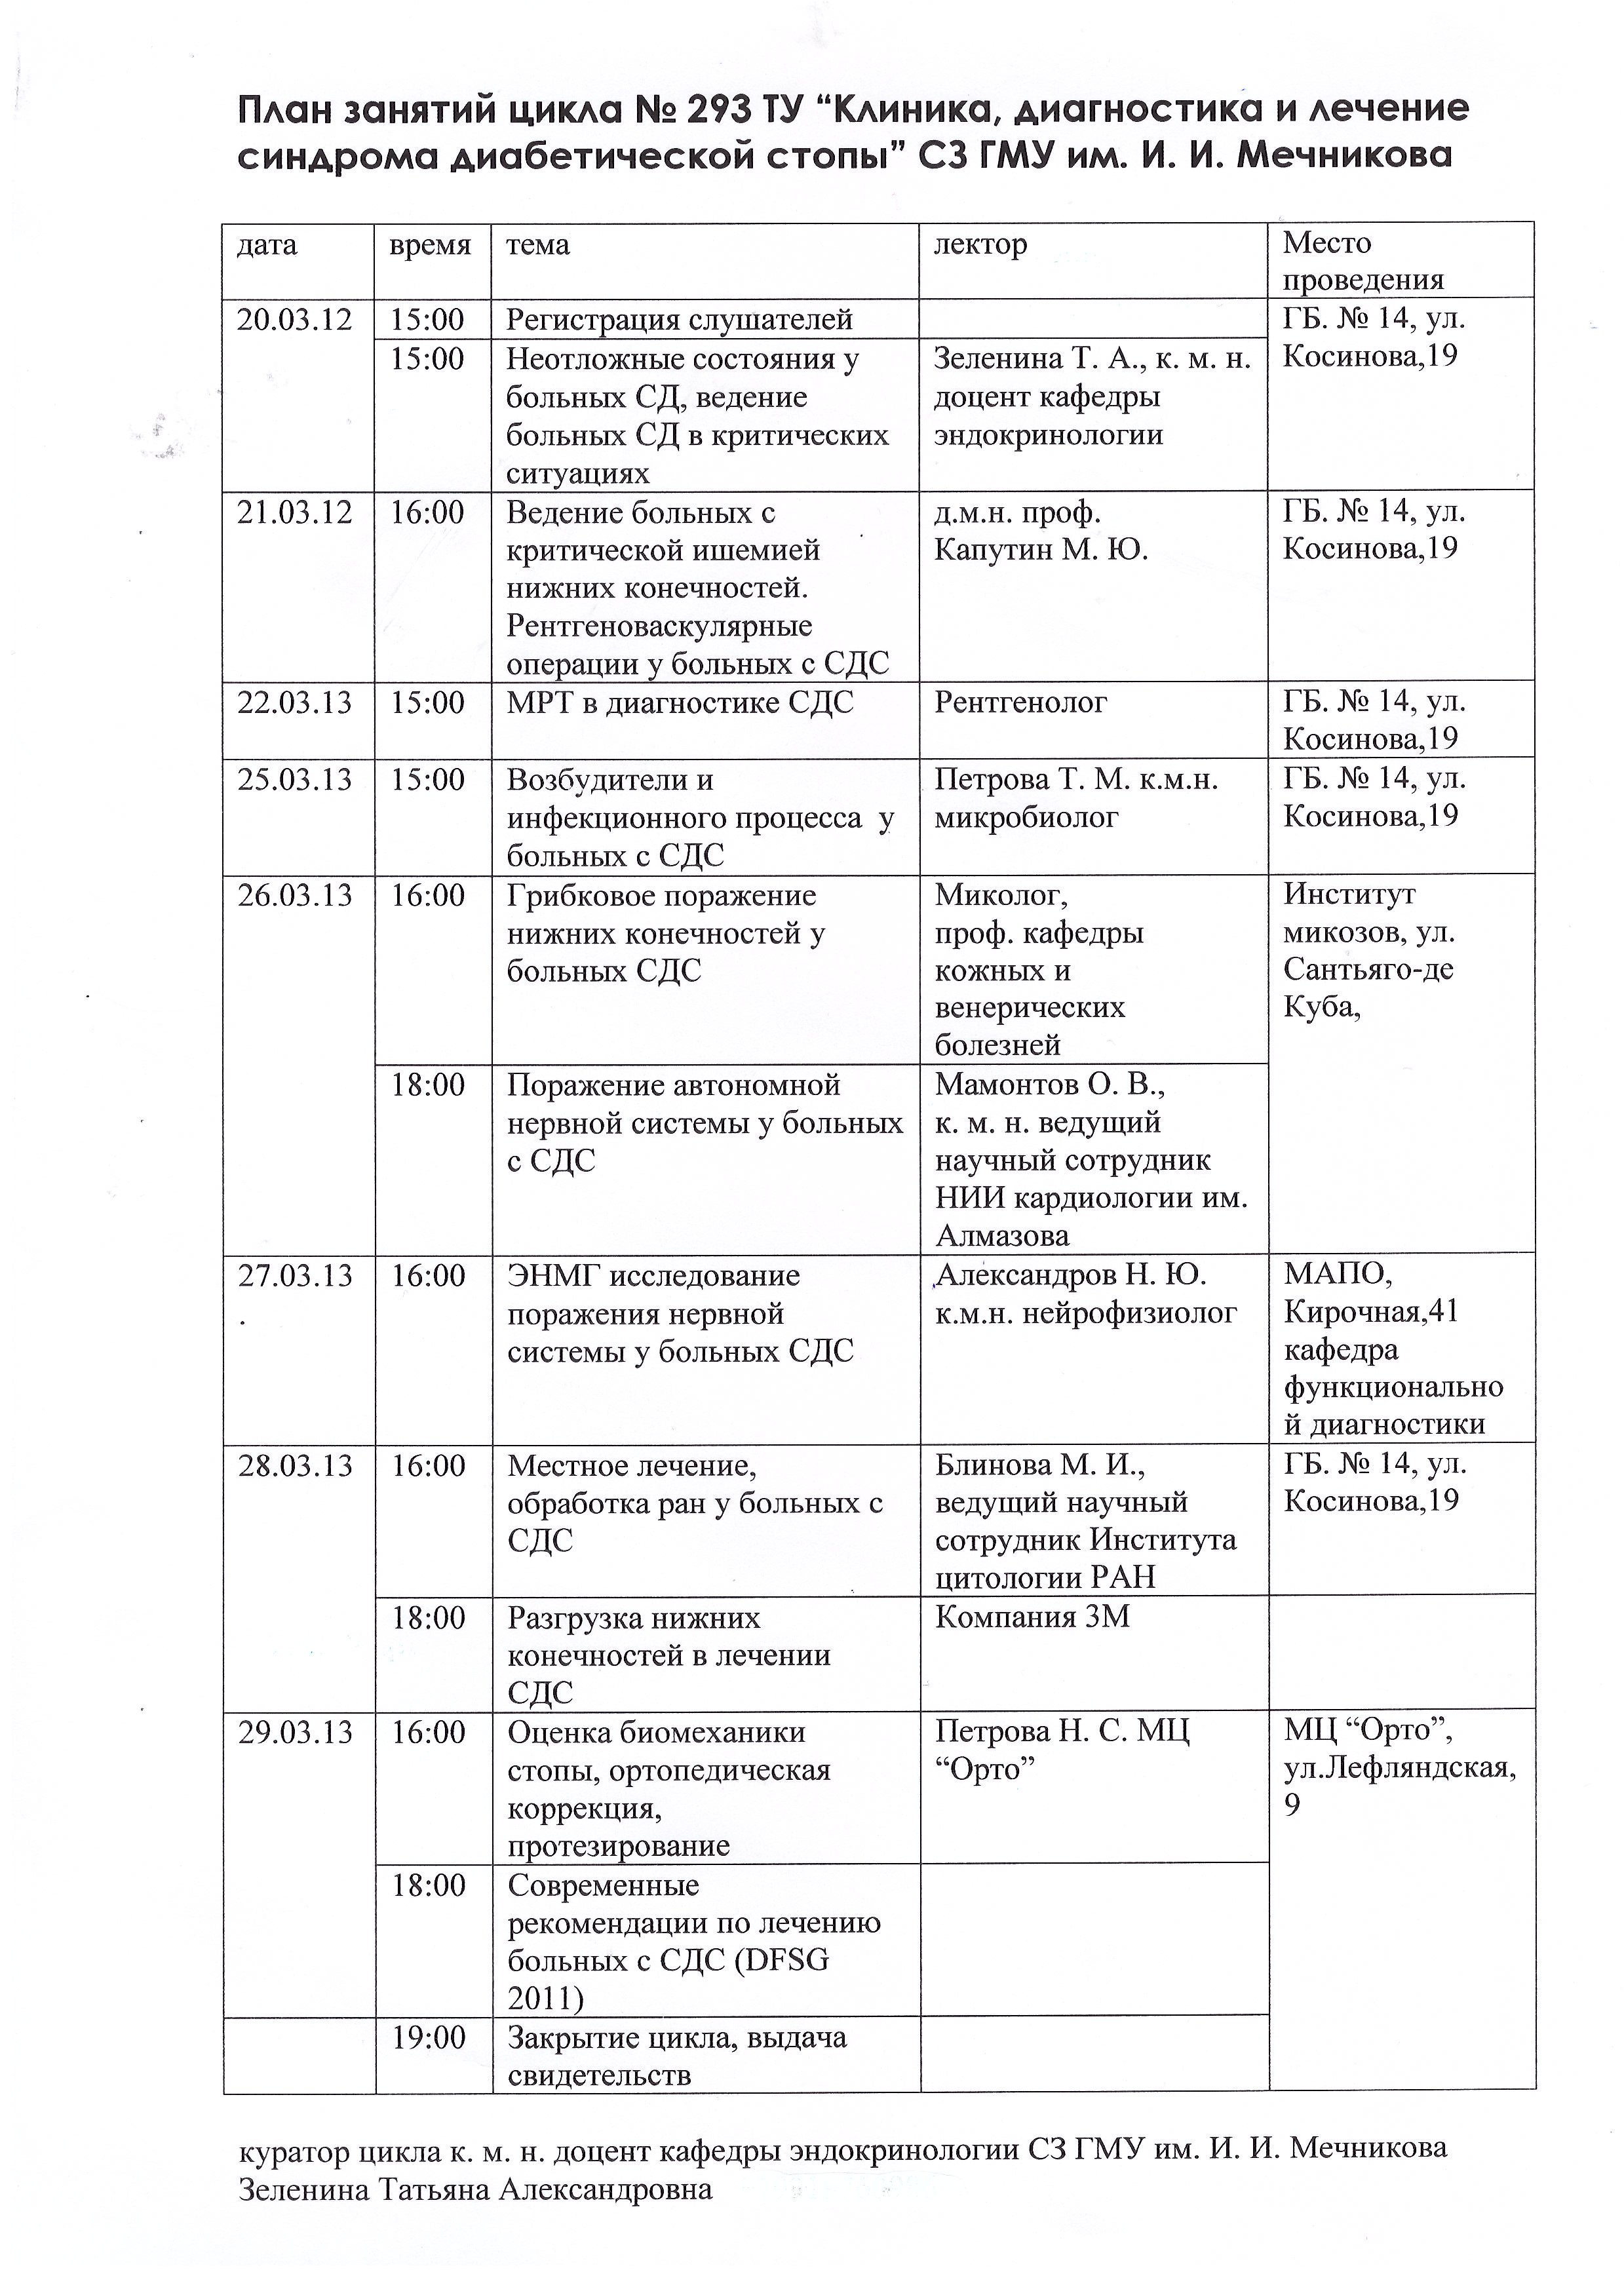 Цикл занятий в марте 2013 в СЗ ГМУ Мечникова